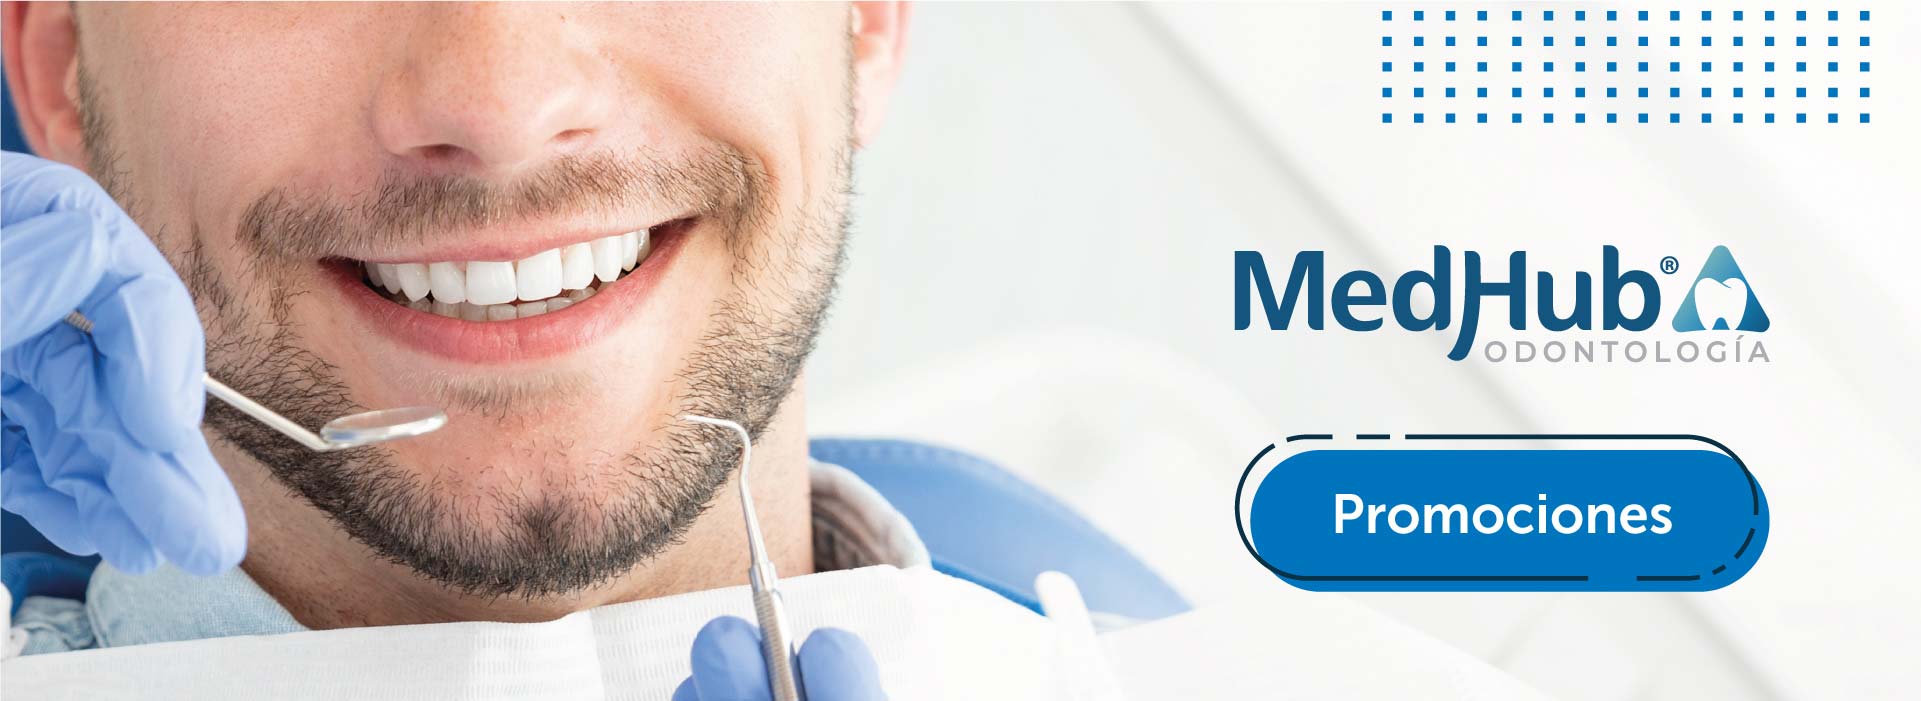 Promociones MedHub - Odontología - Dentegra® Seguros Dentales